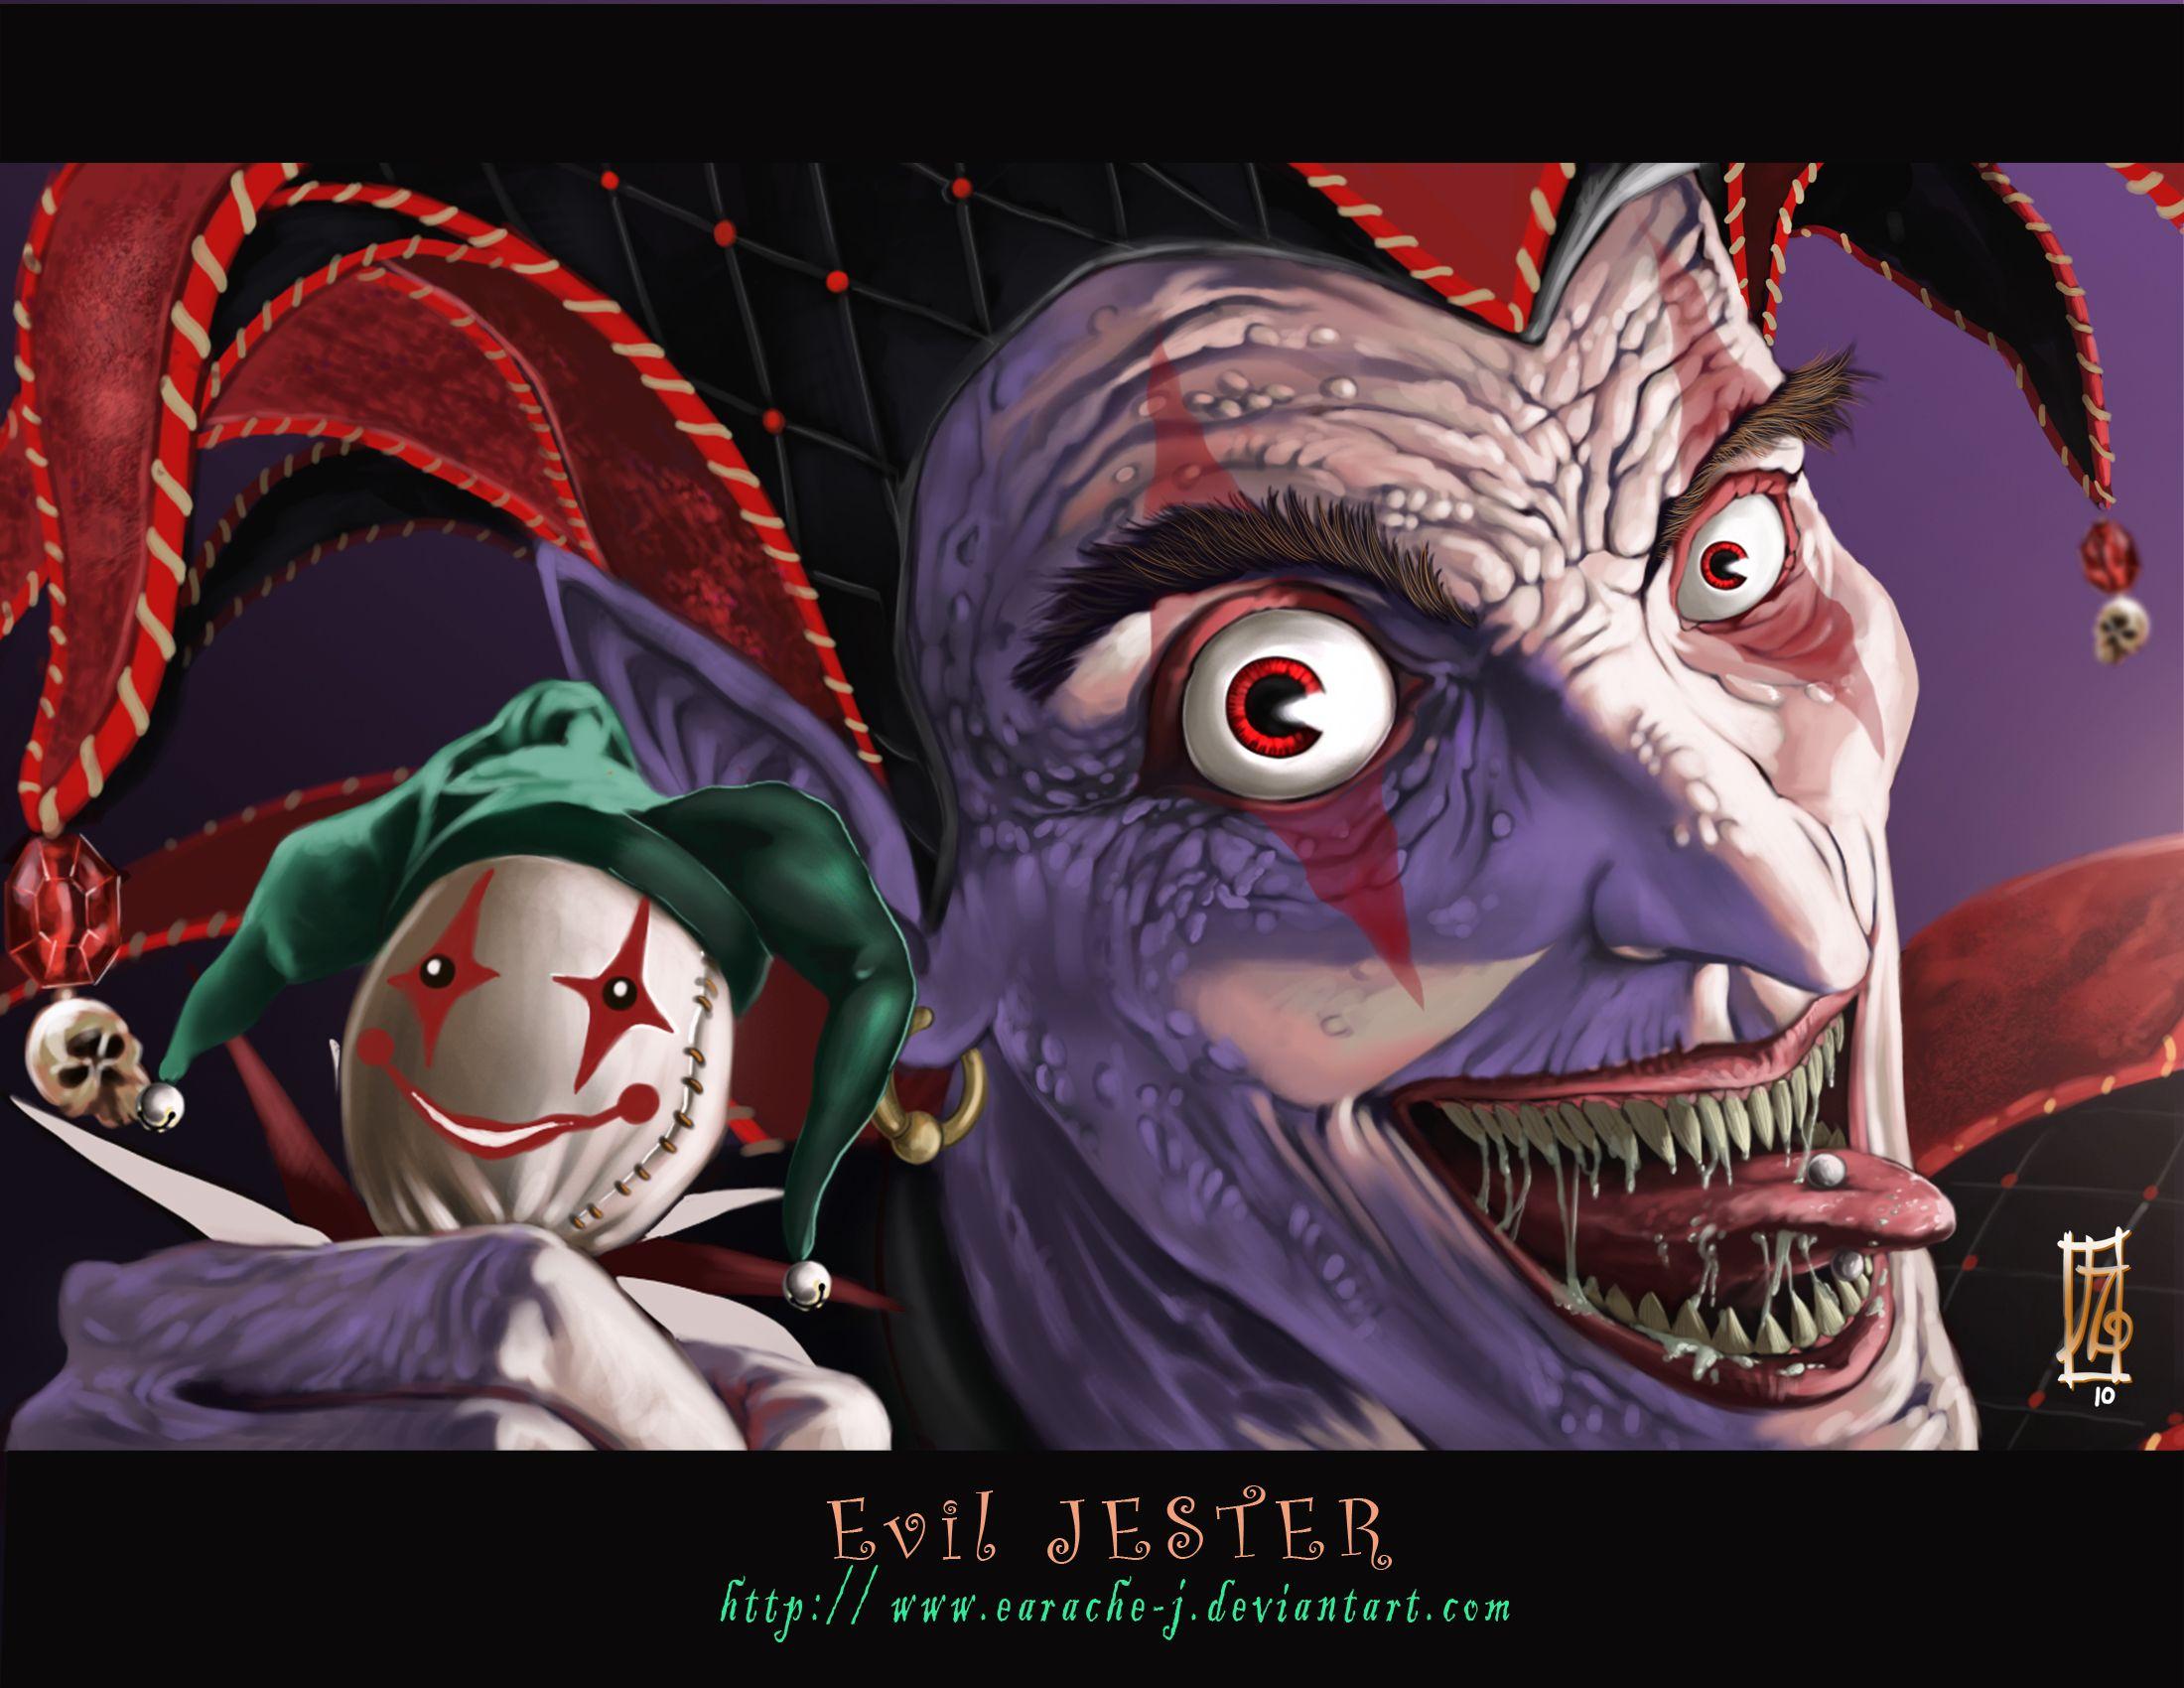 Evil Jester wallpaper from Clowns wallpaper. Fun Clowns. Evil